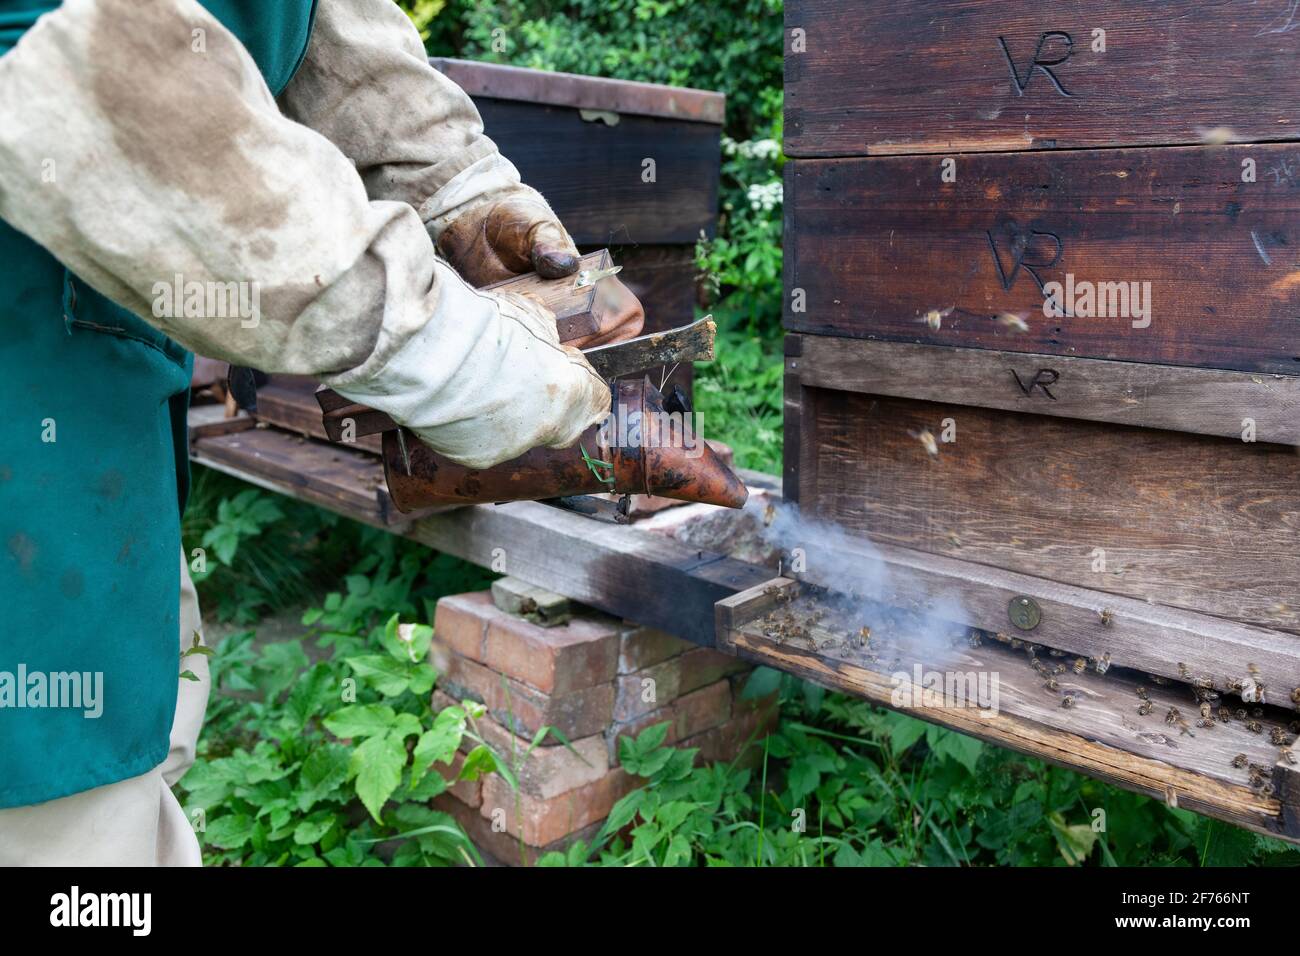 Beekeeper using smoke to calm bees, UK Stock Photo